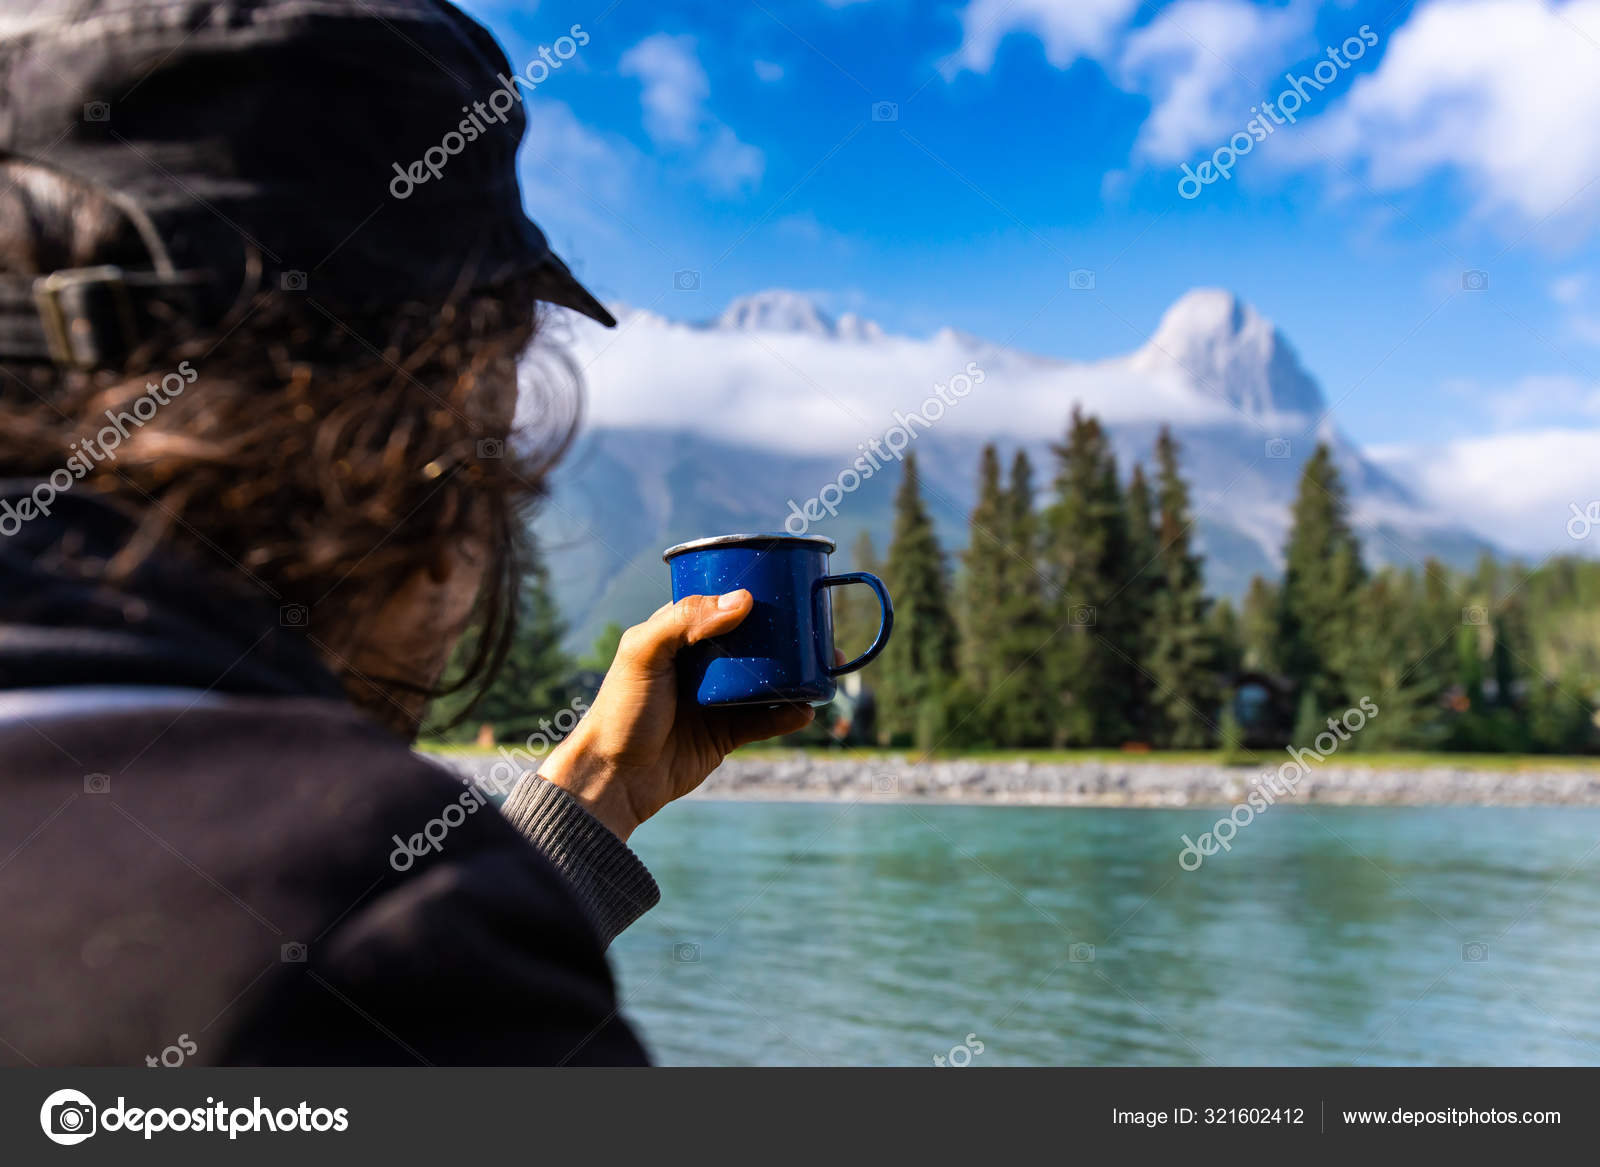 High Snowcapped Mountain Lake enamel mug